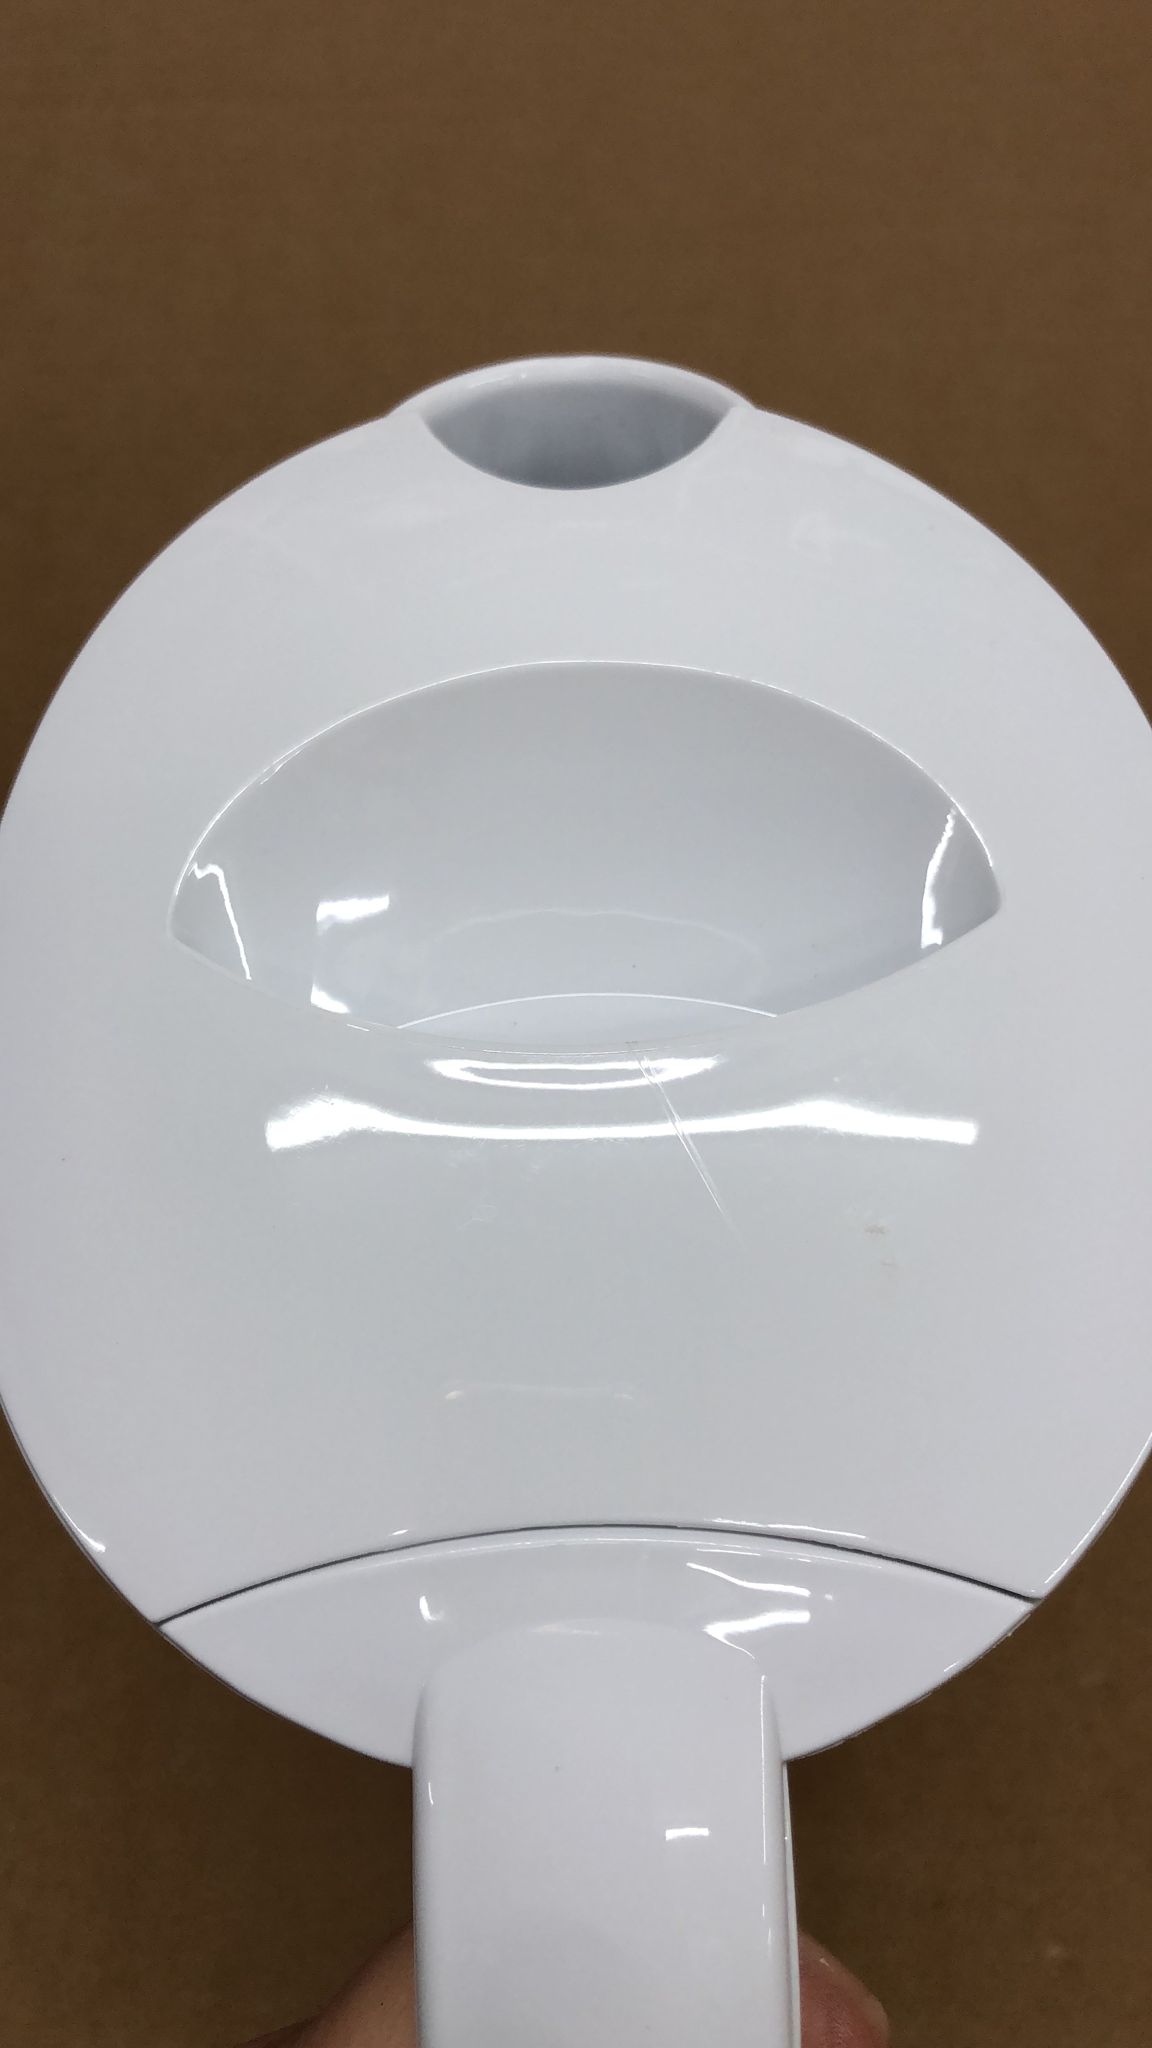 Daewoo Plastic Chrome Kettle, 1.7 Litres, Fast Boil, Lightweight, Easy Clean - White 1239